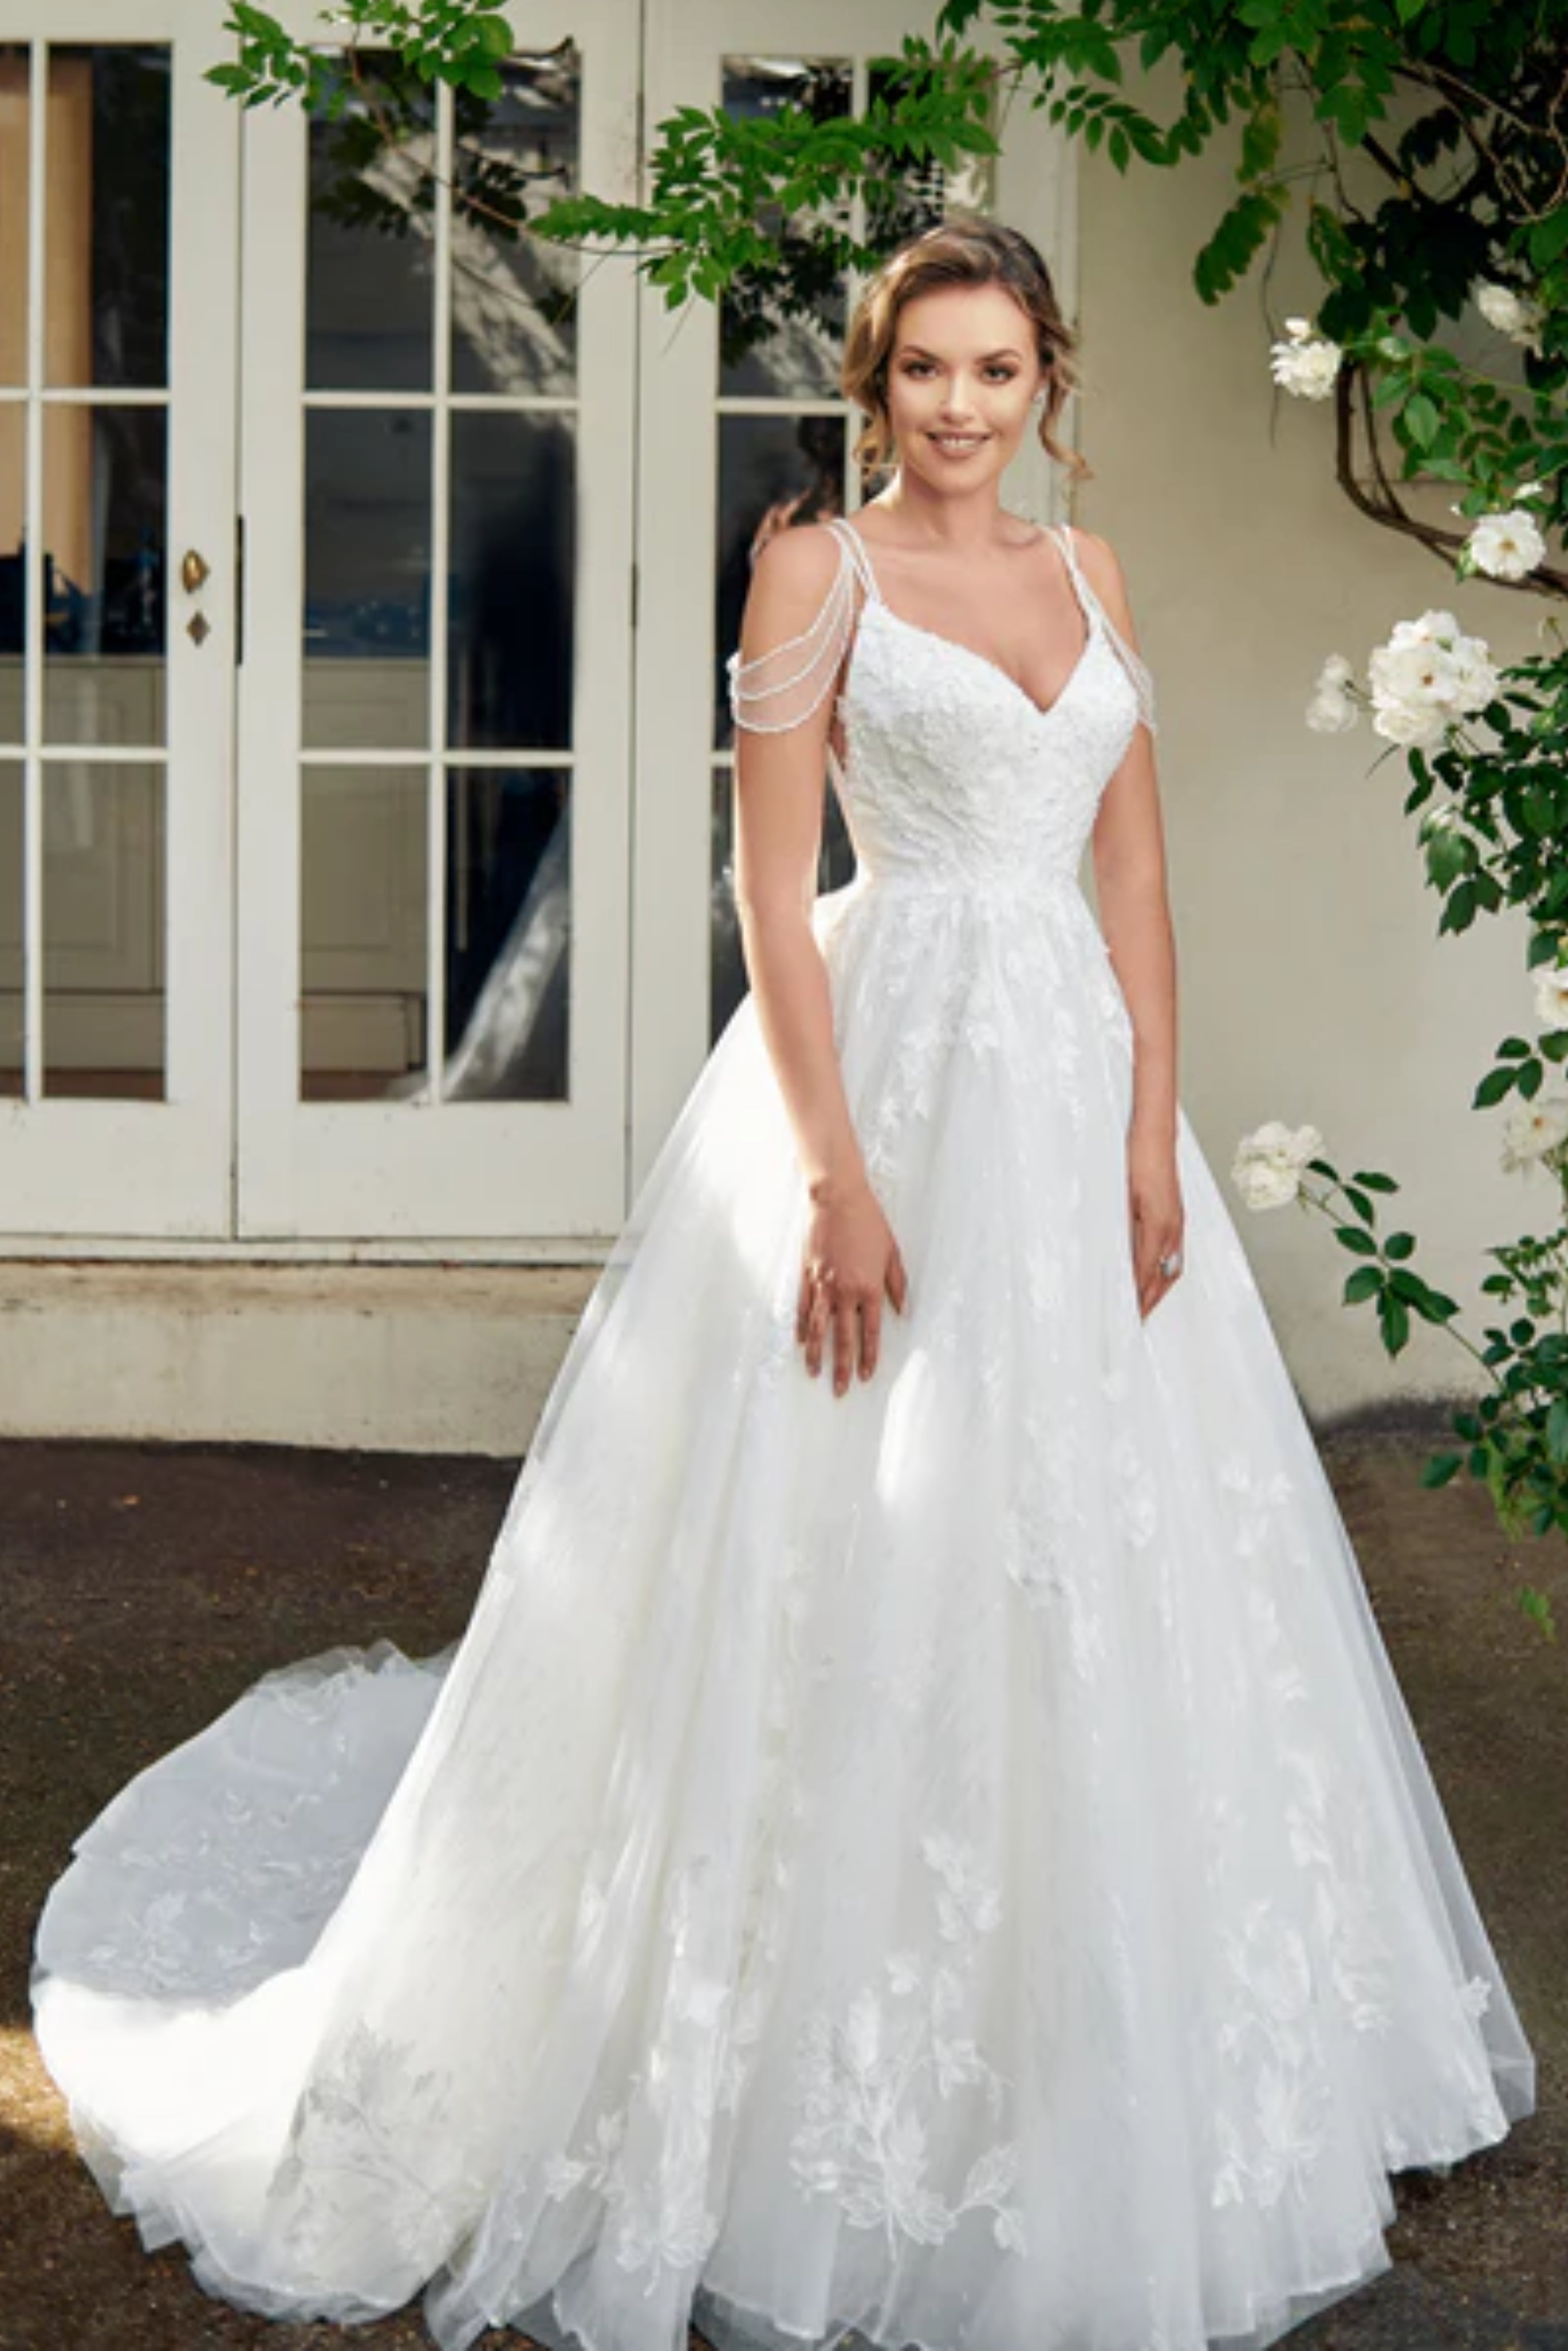 Wedding Dresses Singapore: Top Designer Gowns Online - Love, Fioyo